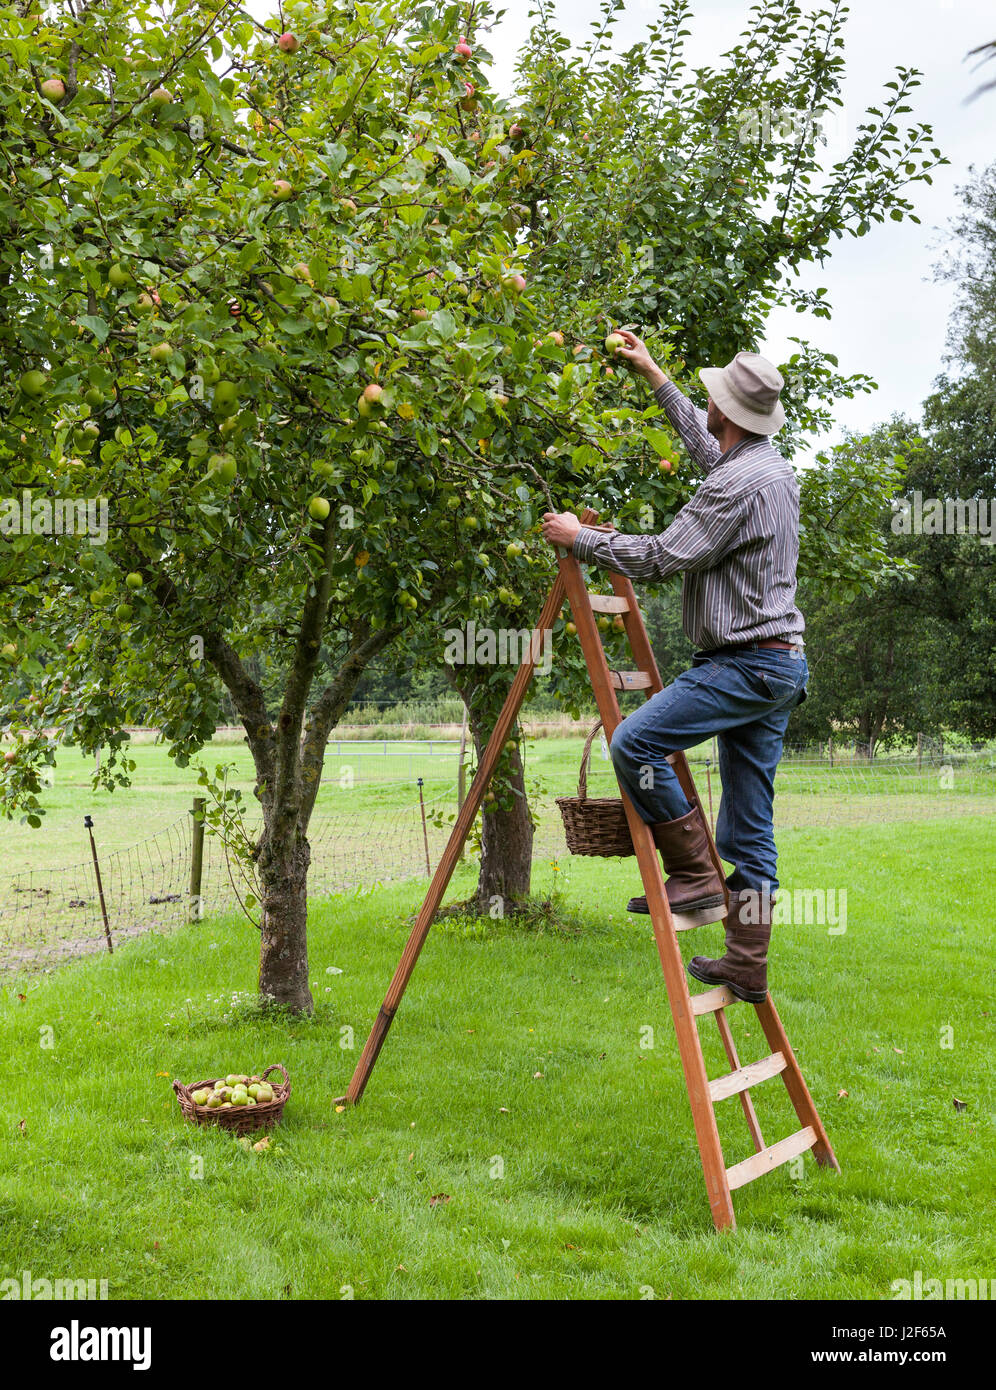 Man on ladder picking apples Stock Photo